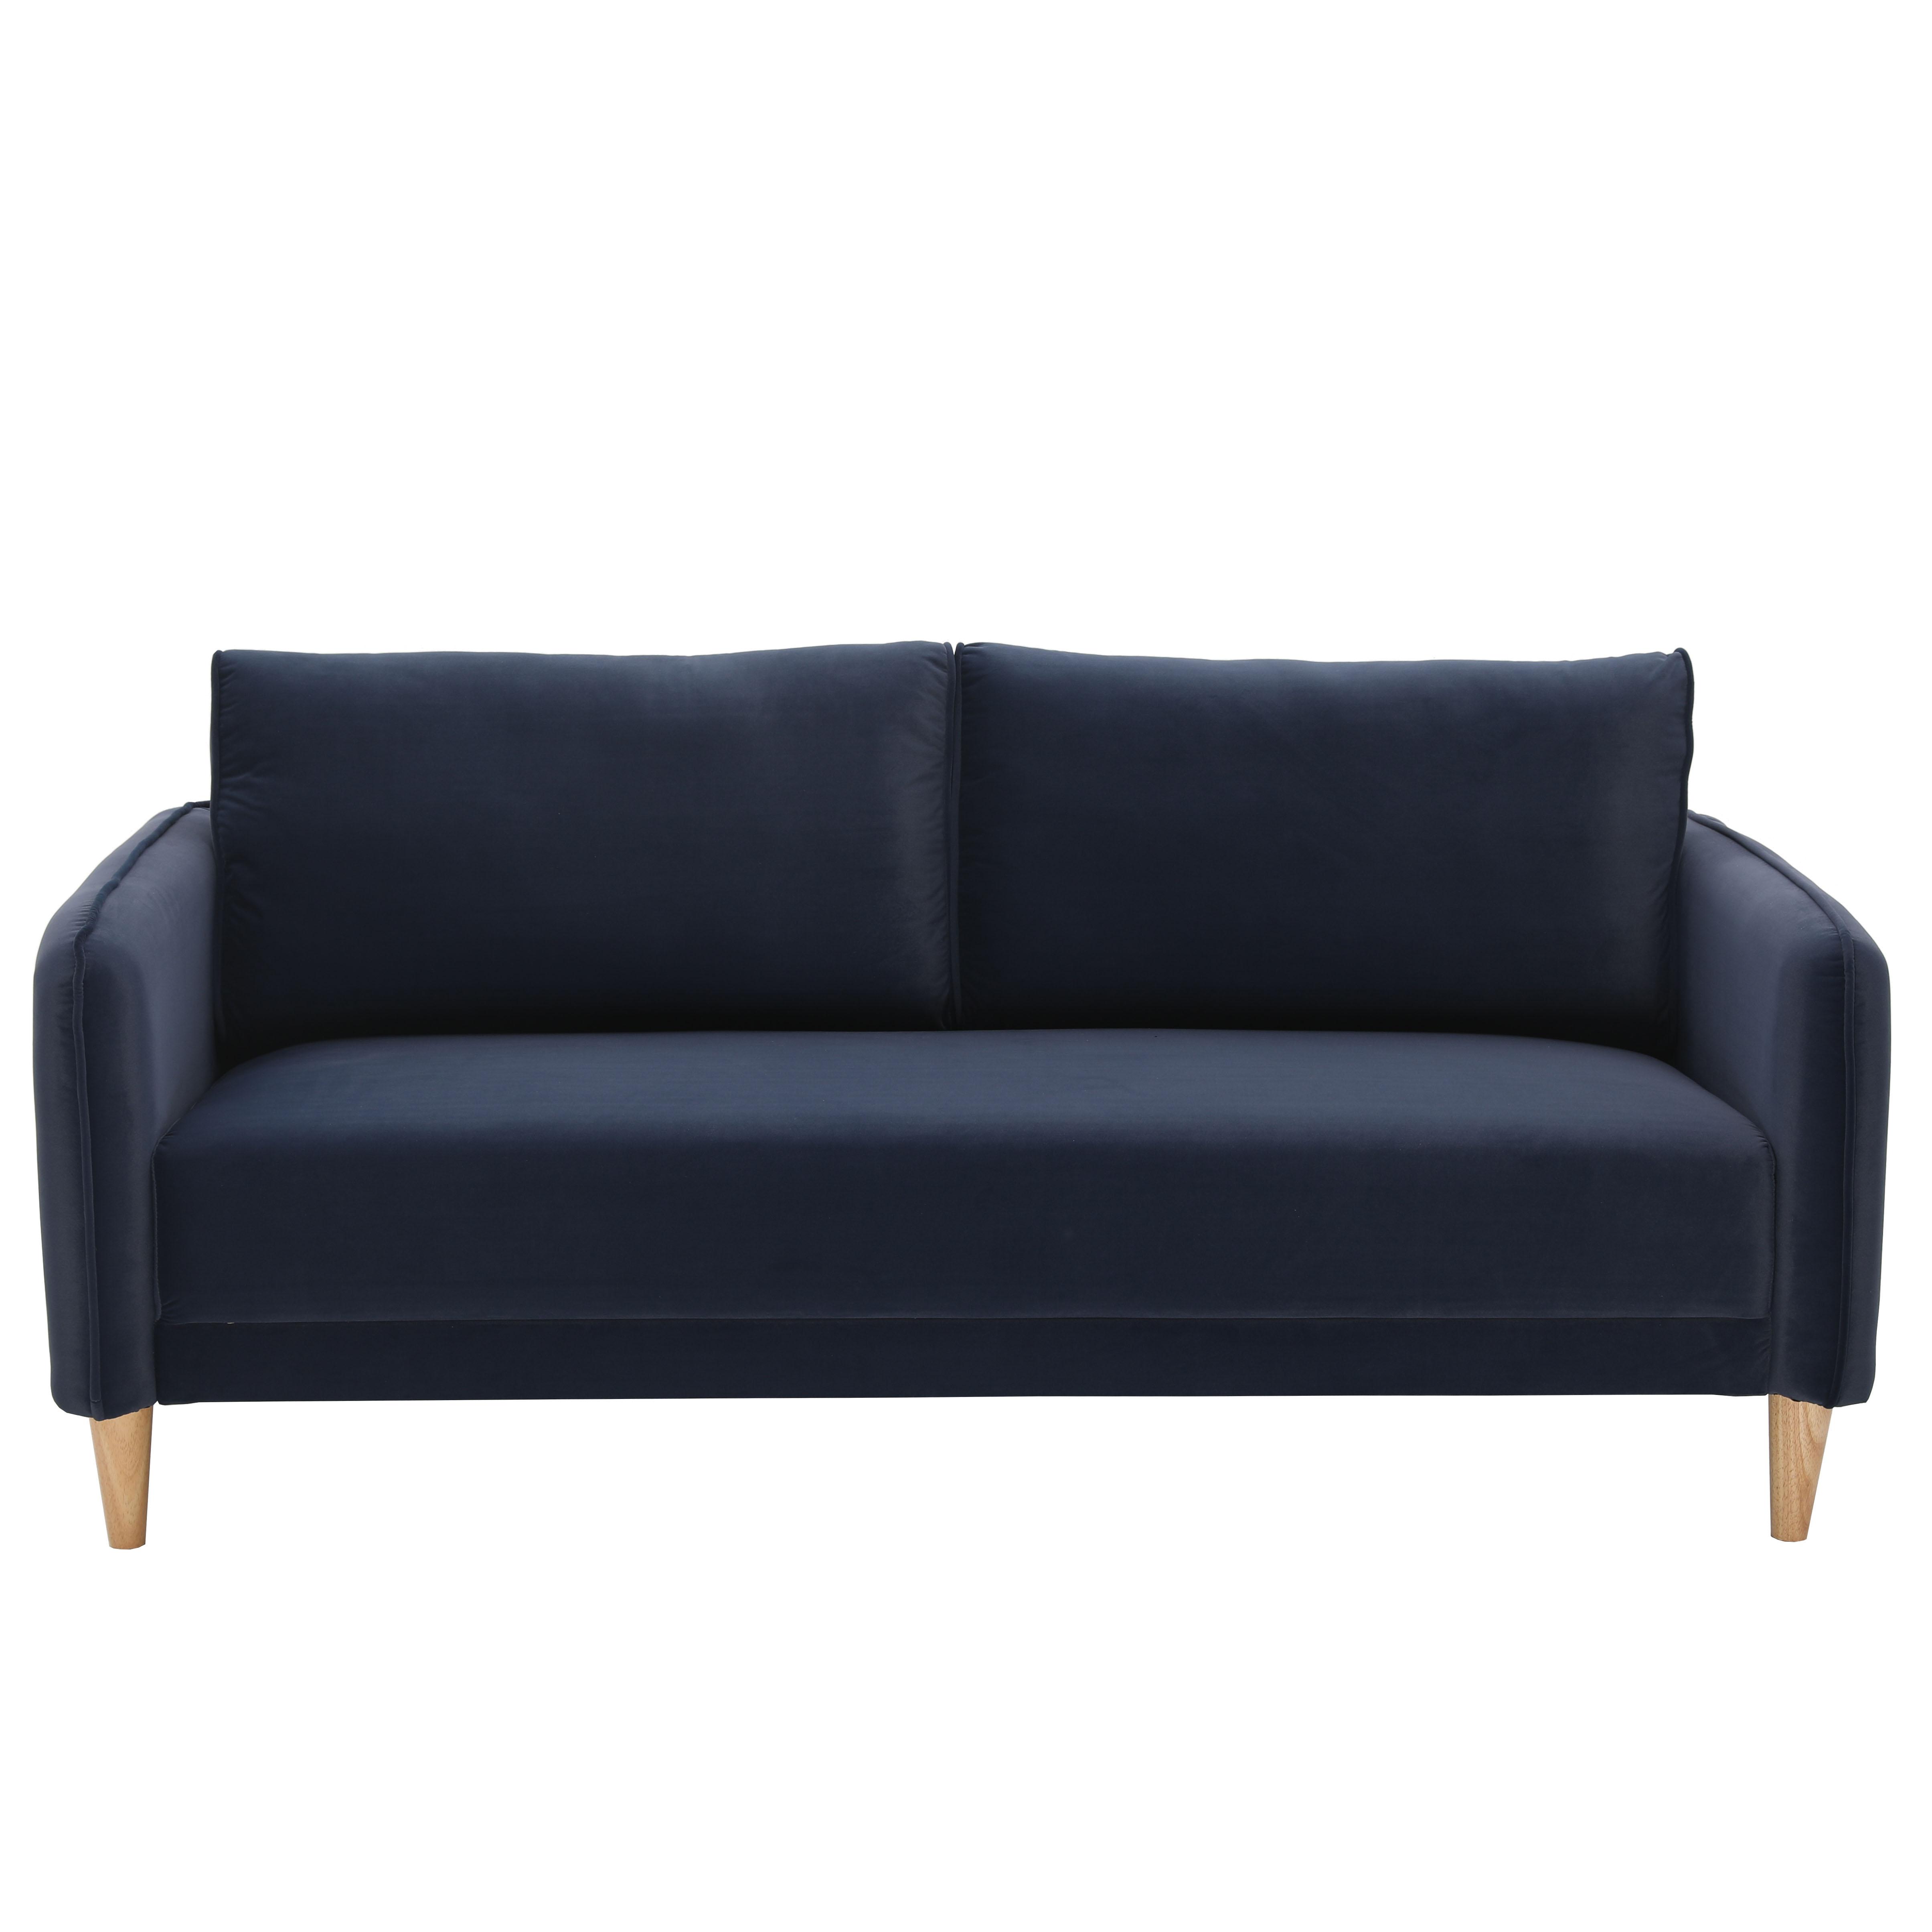 Sofa "Livia", dreisitzer, dunkelblau, Samt - Dunkelblau/Naturfarben, MODERN, Holz/Textil (176/78/76cm) - Bessagi Home